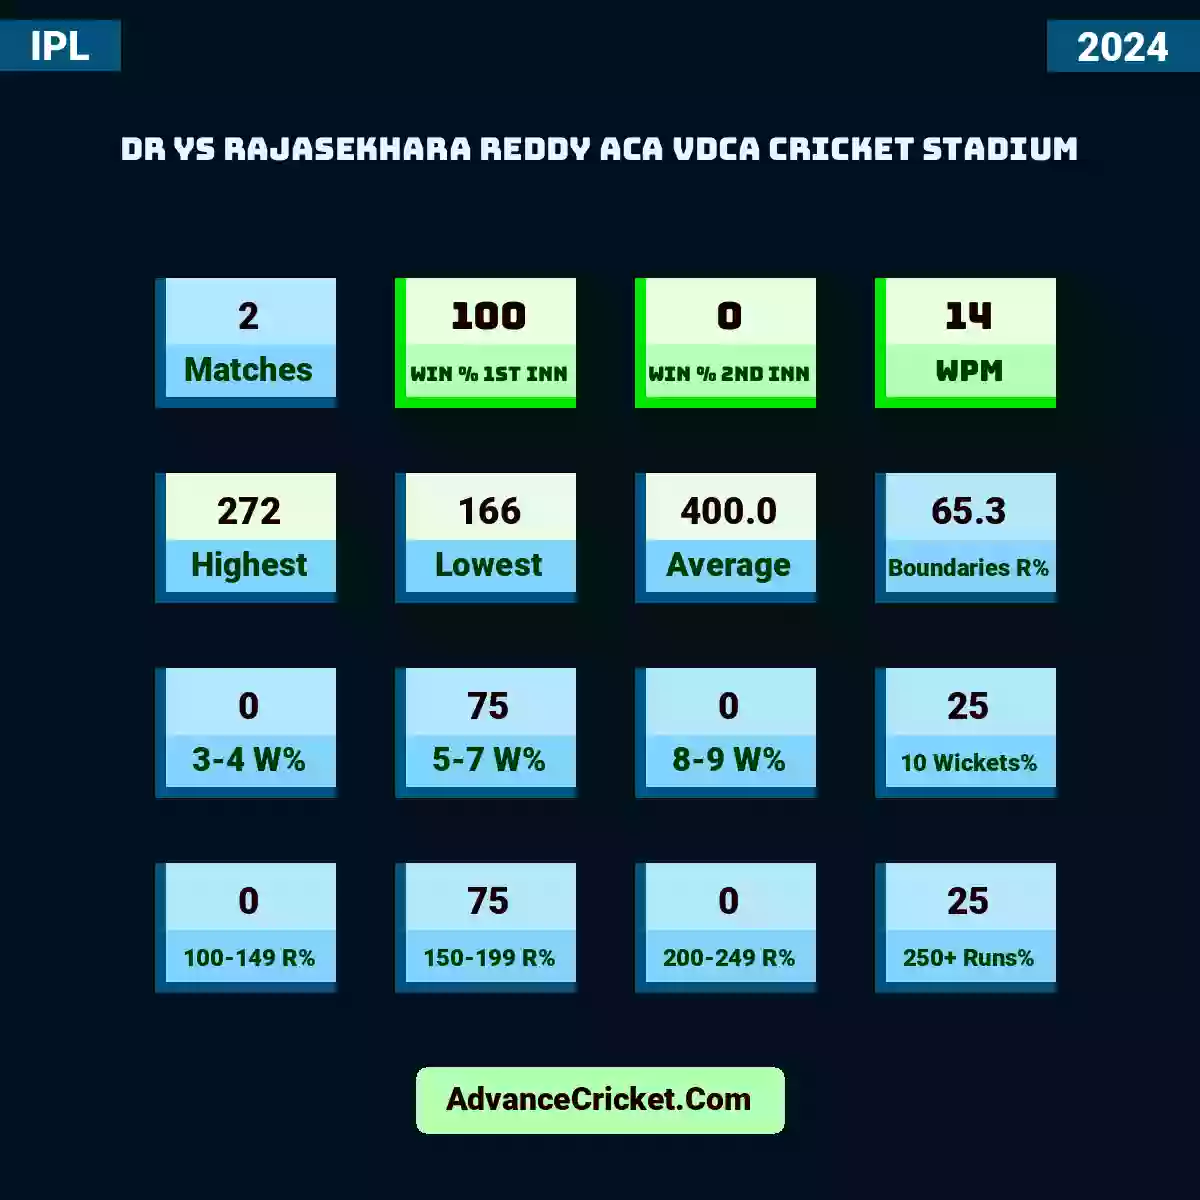 Image showing Dr YS Rajasekhara Reddy ACA VDCA Cricket Stadium IPL 2024 with Matches: 2, Win % 1st Inn: 100, Win % 2nd Inn: 0, WPM: 14, Highest: 272, Lowest: 166, Average: 400.0, Boundaries R%: 65.3, 3-4 W%: 0, 5-7 W%: 75, 8-9 W%: 0, 10 Wickets%: 25, 100-149 R%: 0, 150-199 R%: 75, 200-249 R%: 0, 250